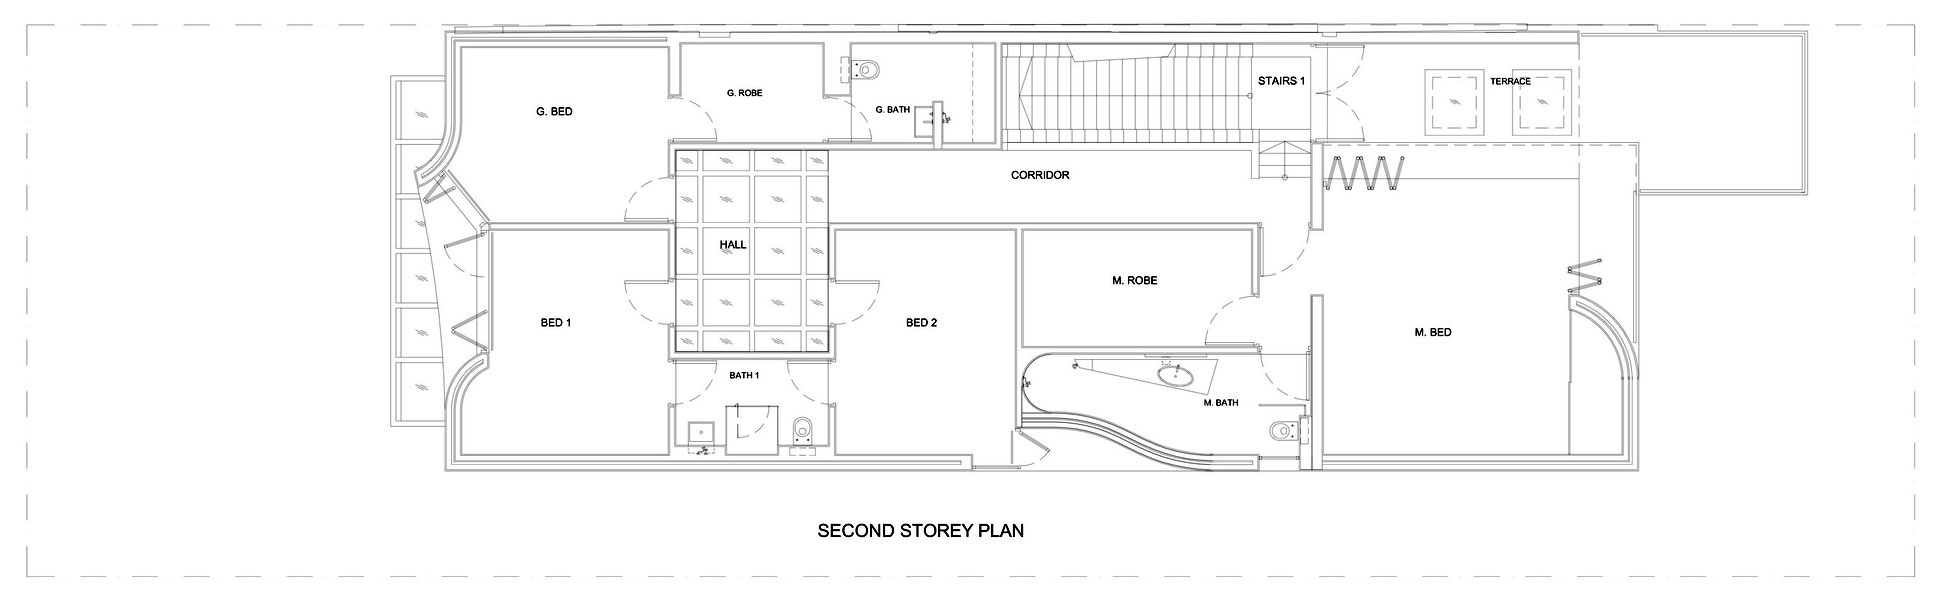 Second Floor Plan, Modern Home, Singapore